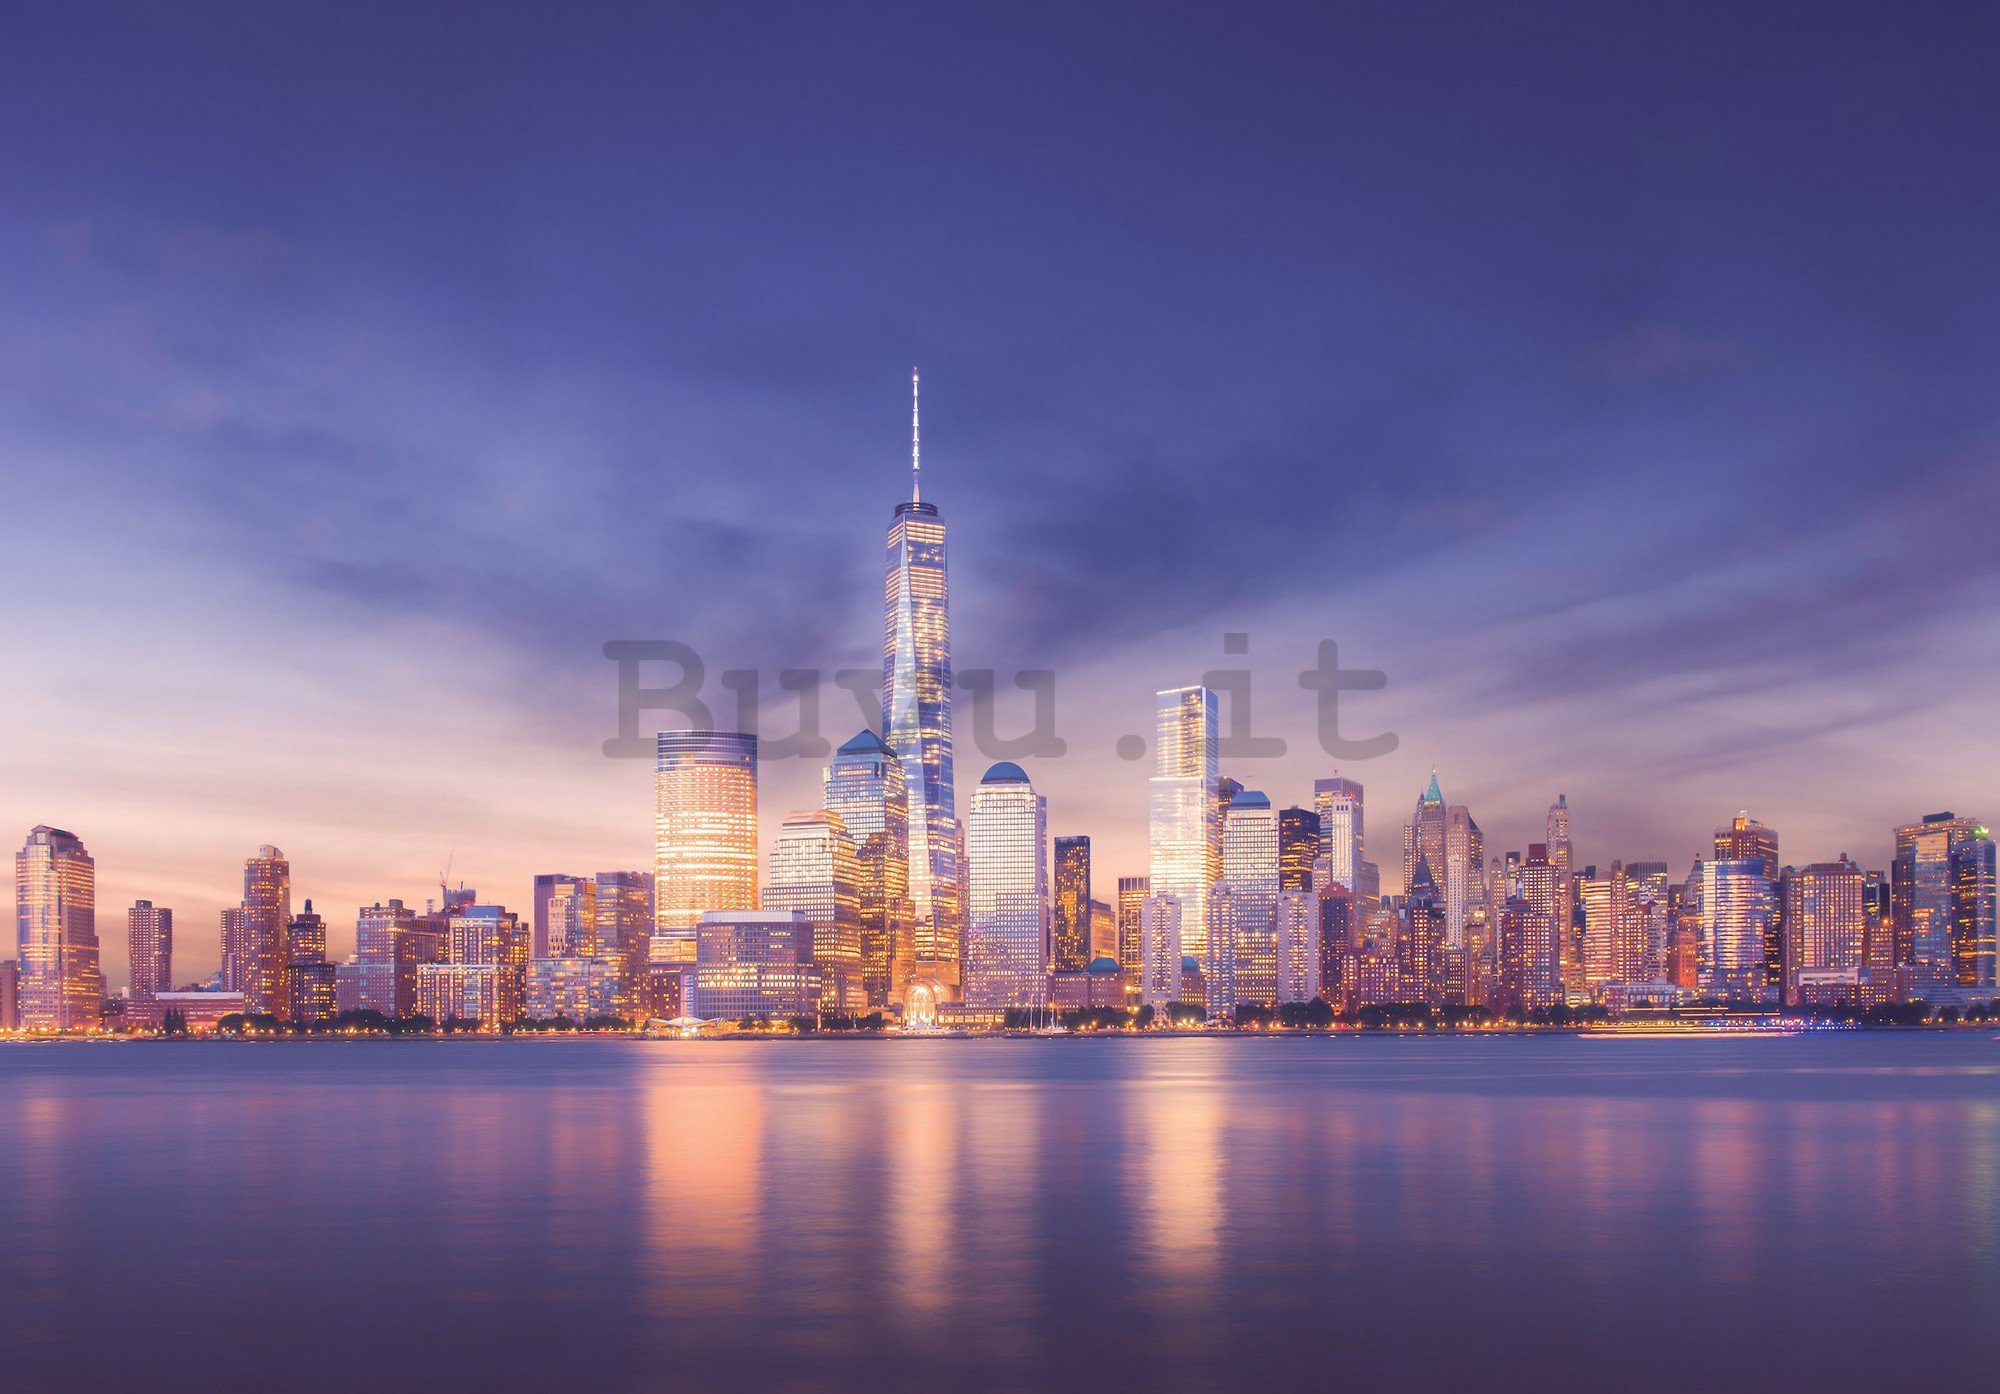 Fotomurale: New York City (Manhattan dopo il tramonto) - 254x92 cm